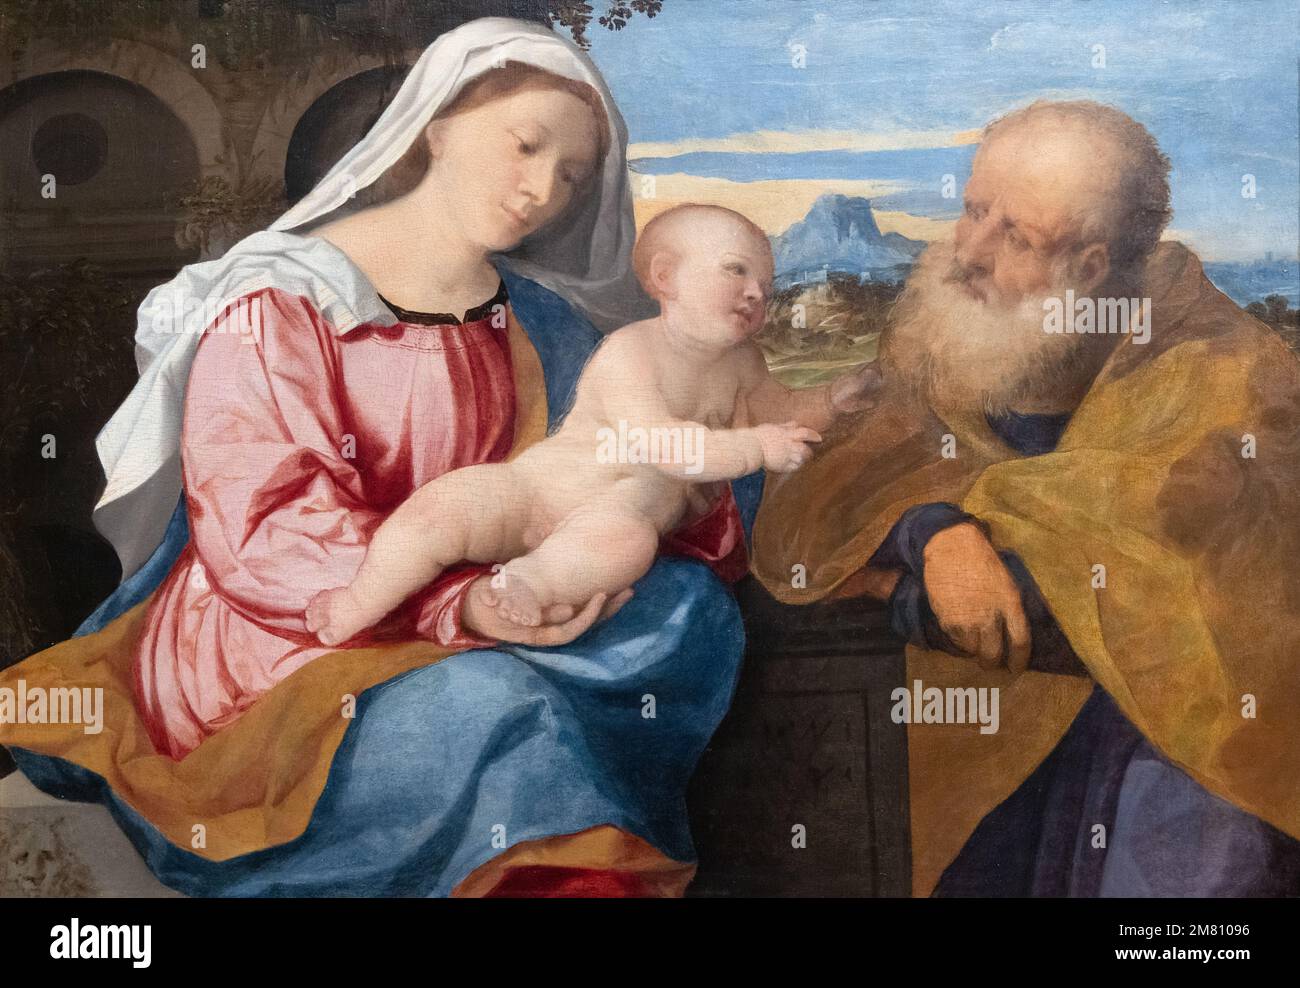 'The Holy Family' oil painting from 16th century painted by Jacopo Palma Il Vecchio, Italian artist 1500s. The Czartoryski Museum, Krakow Poland Stock Photo